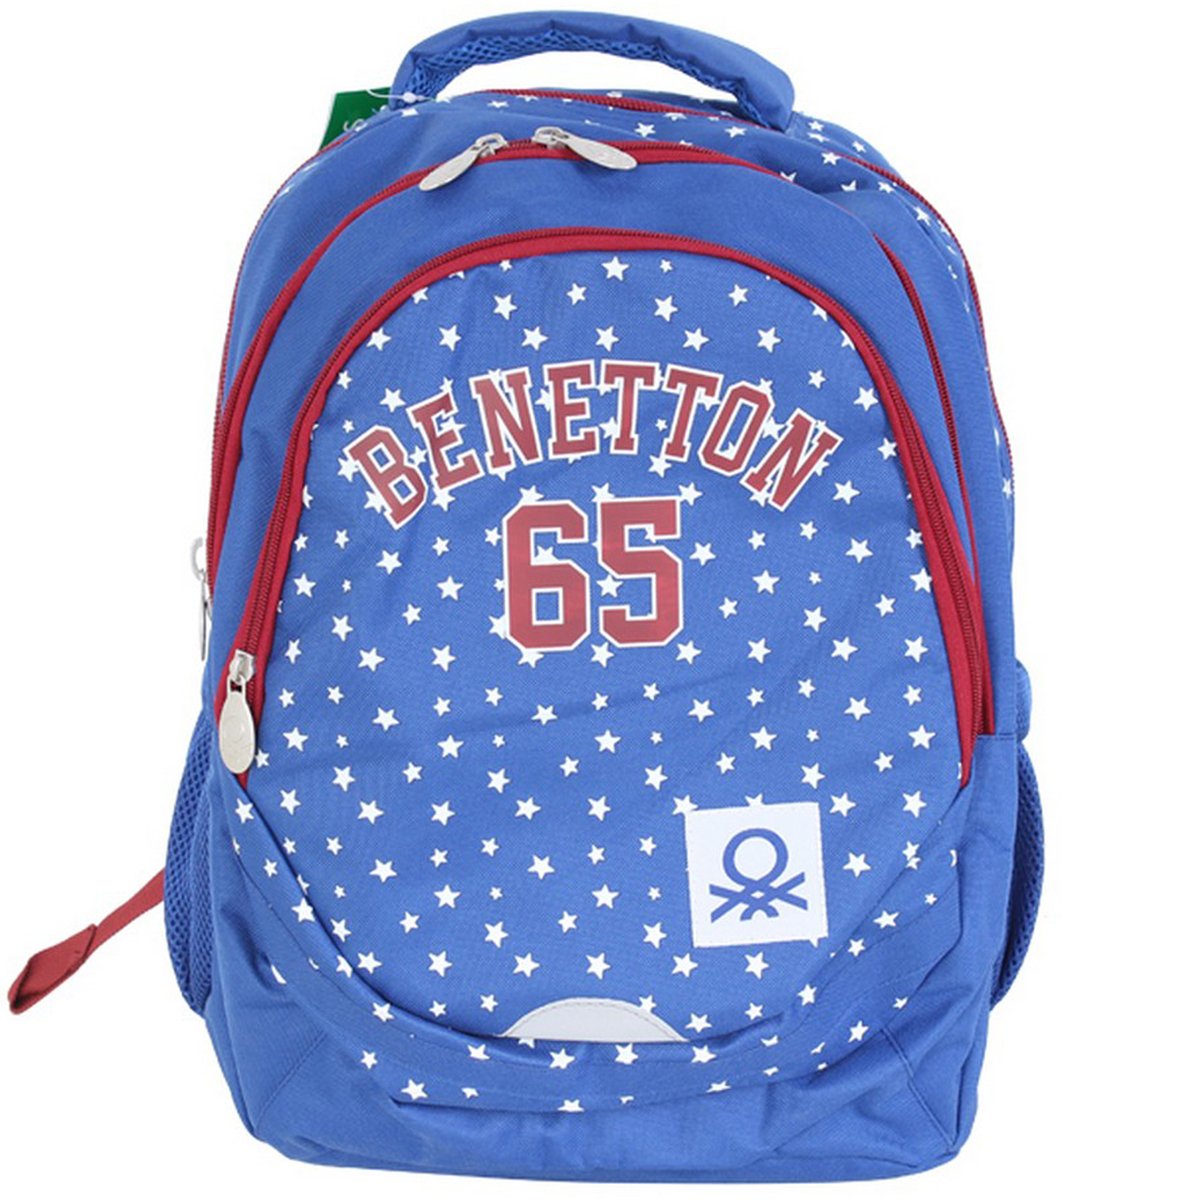 Benetton School Backpack 81635 18inch